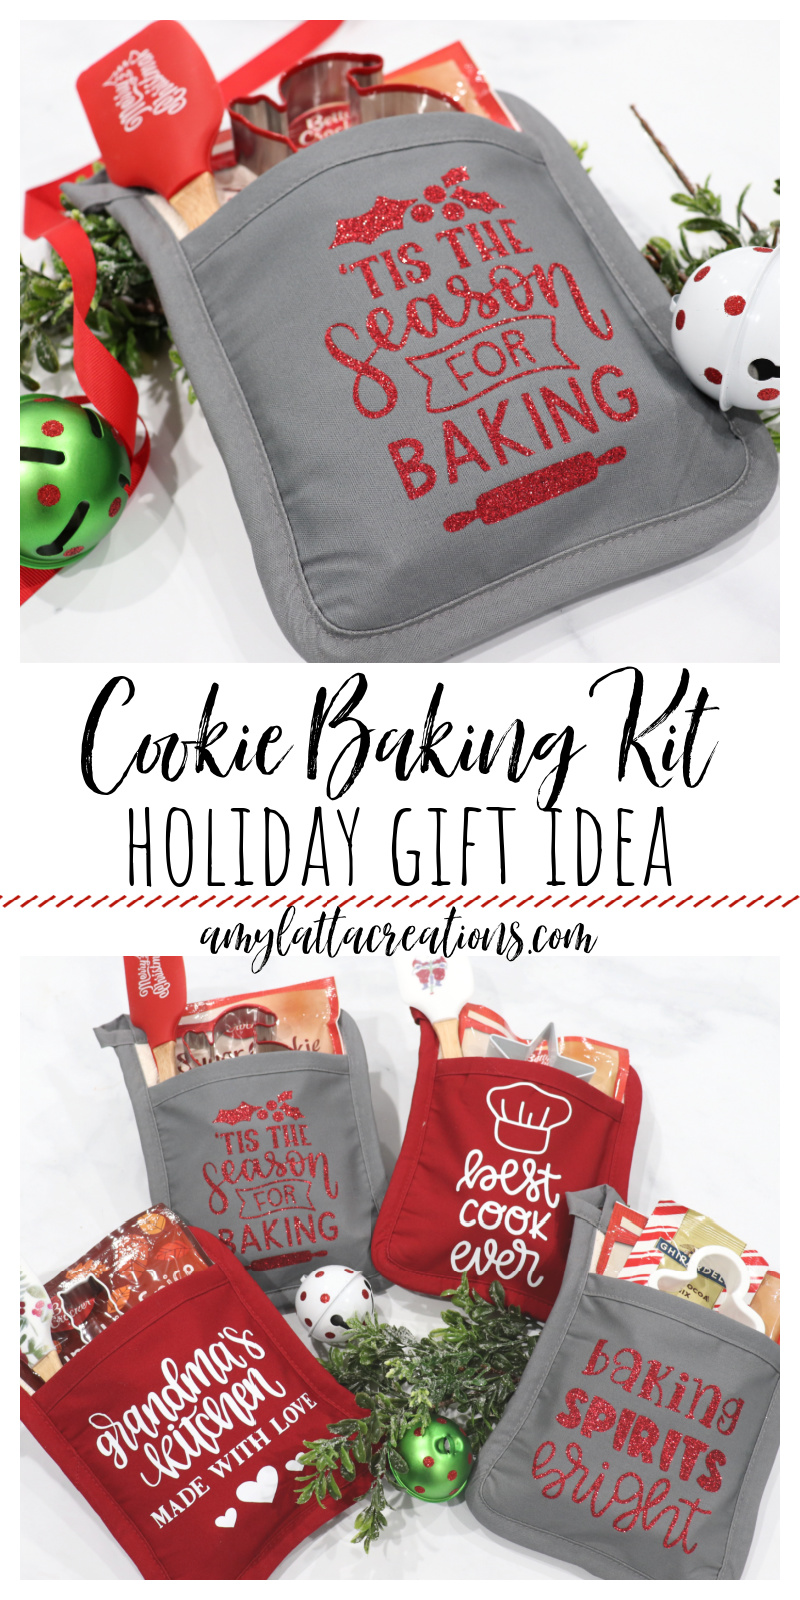 Cookie Baking Kit Holiday Gift Idea